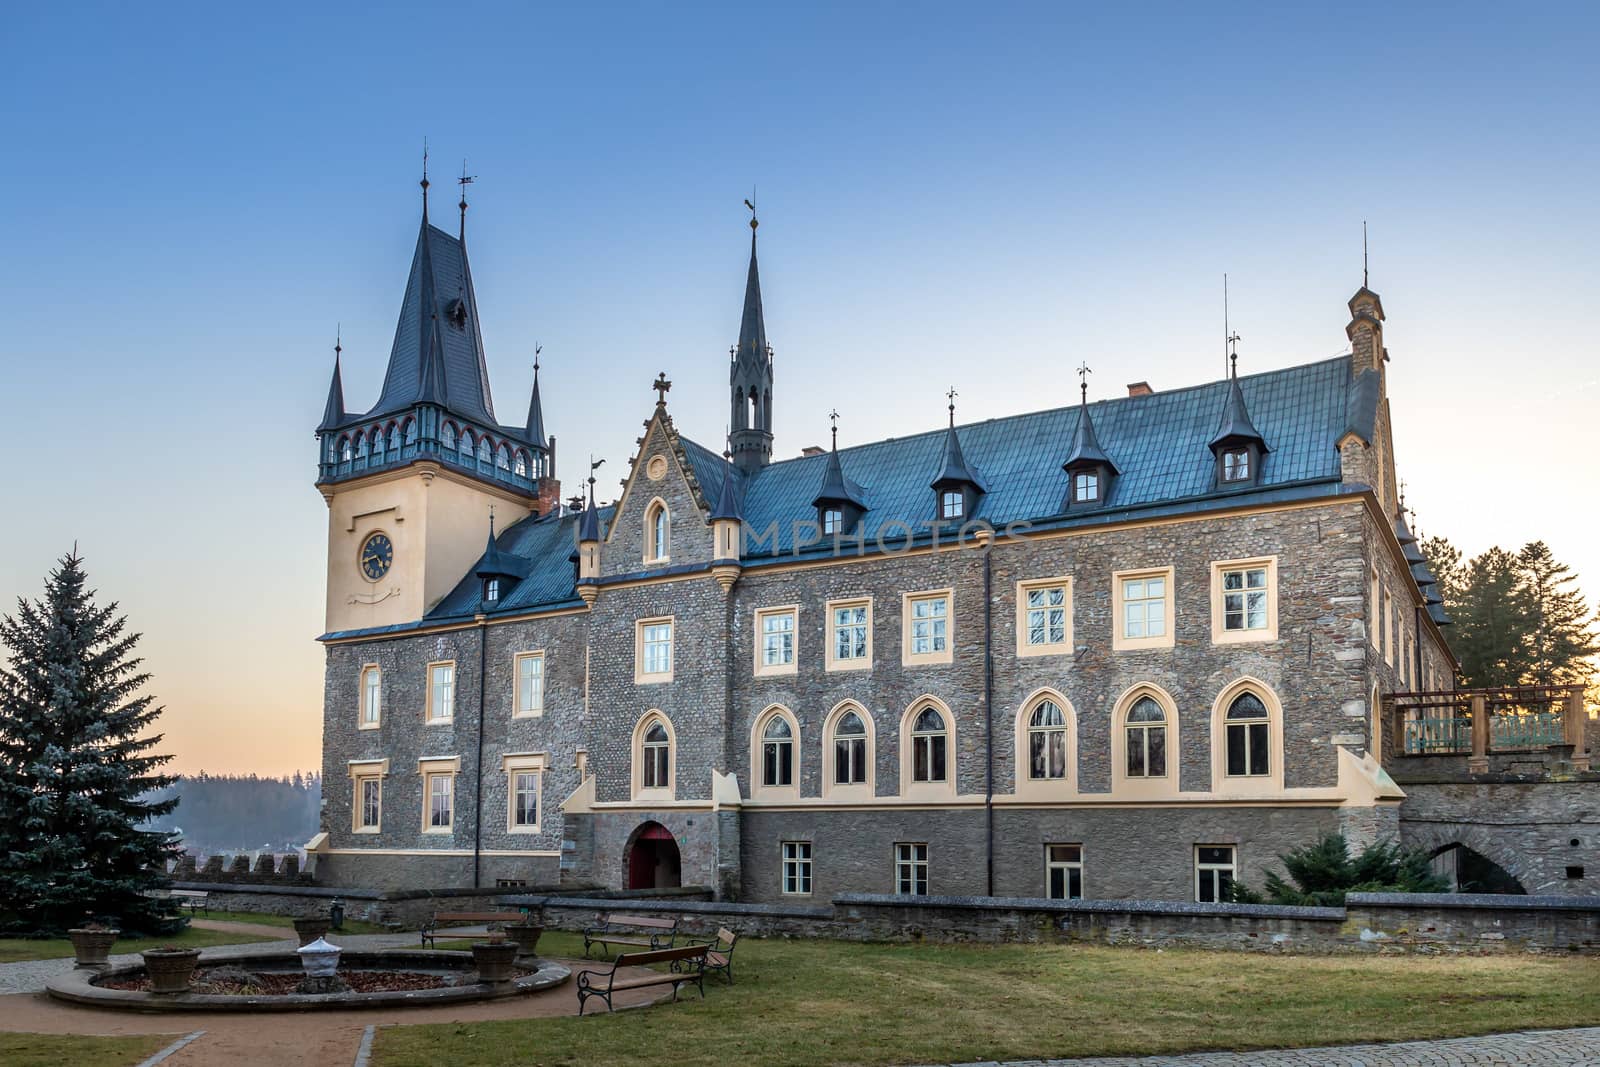 Zruc nad Sazavou, Czechia 2019 - A beautiful Gothic castle in Zruc nad Sazavou in the Central Bohemia region of the Czech Republic.